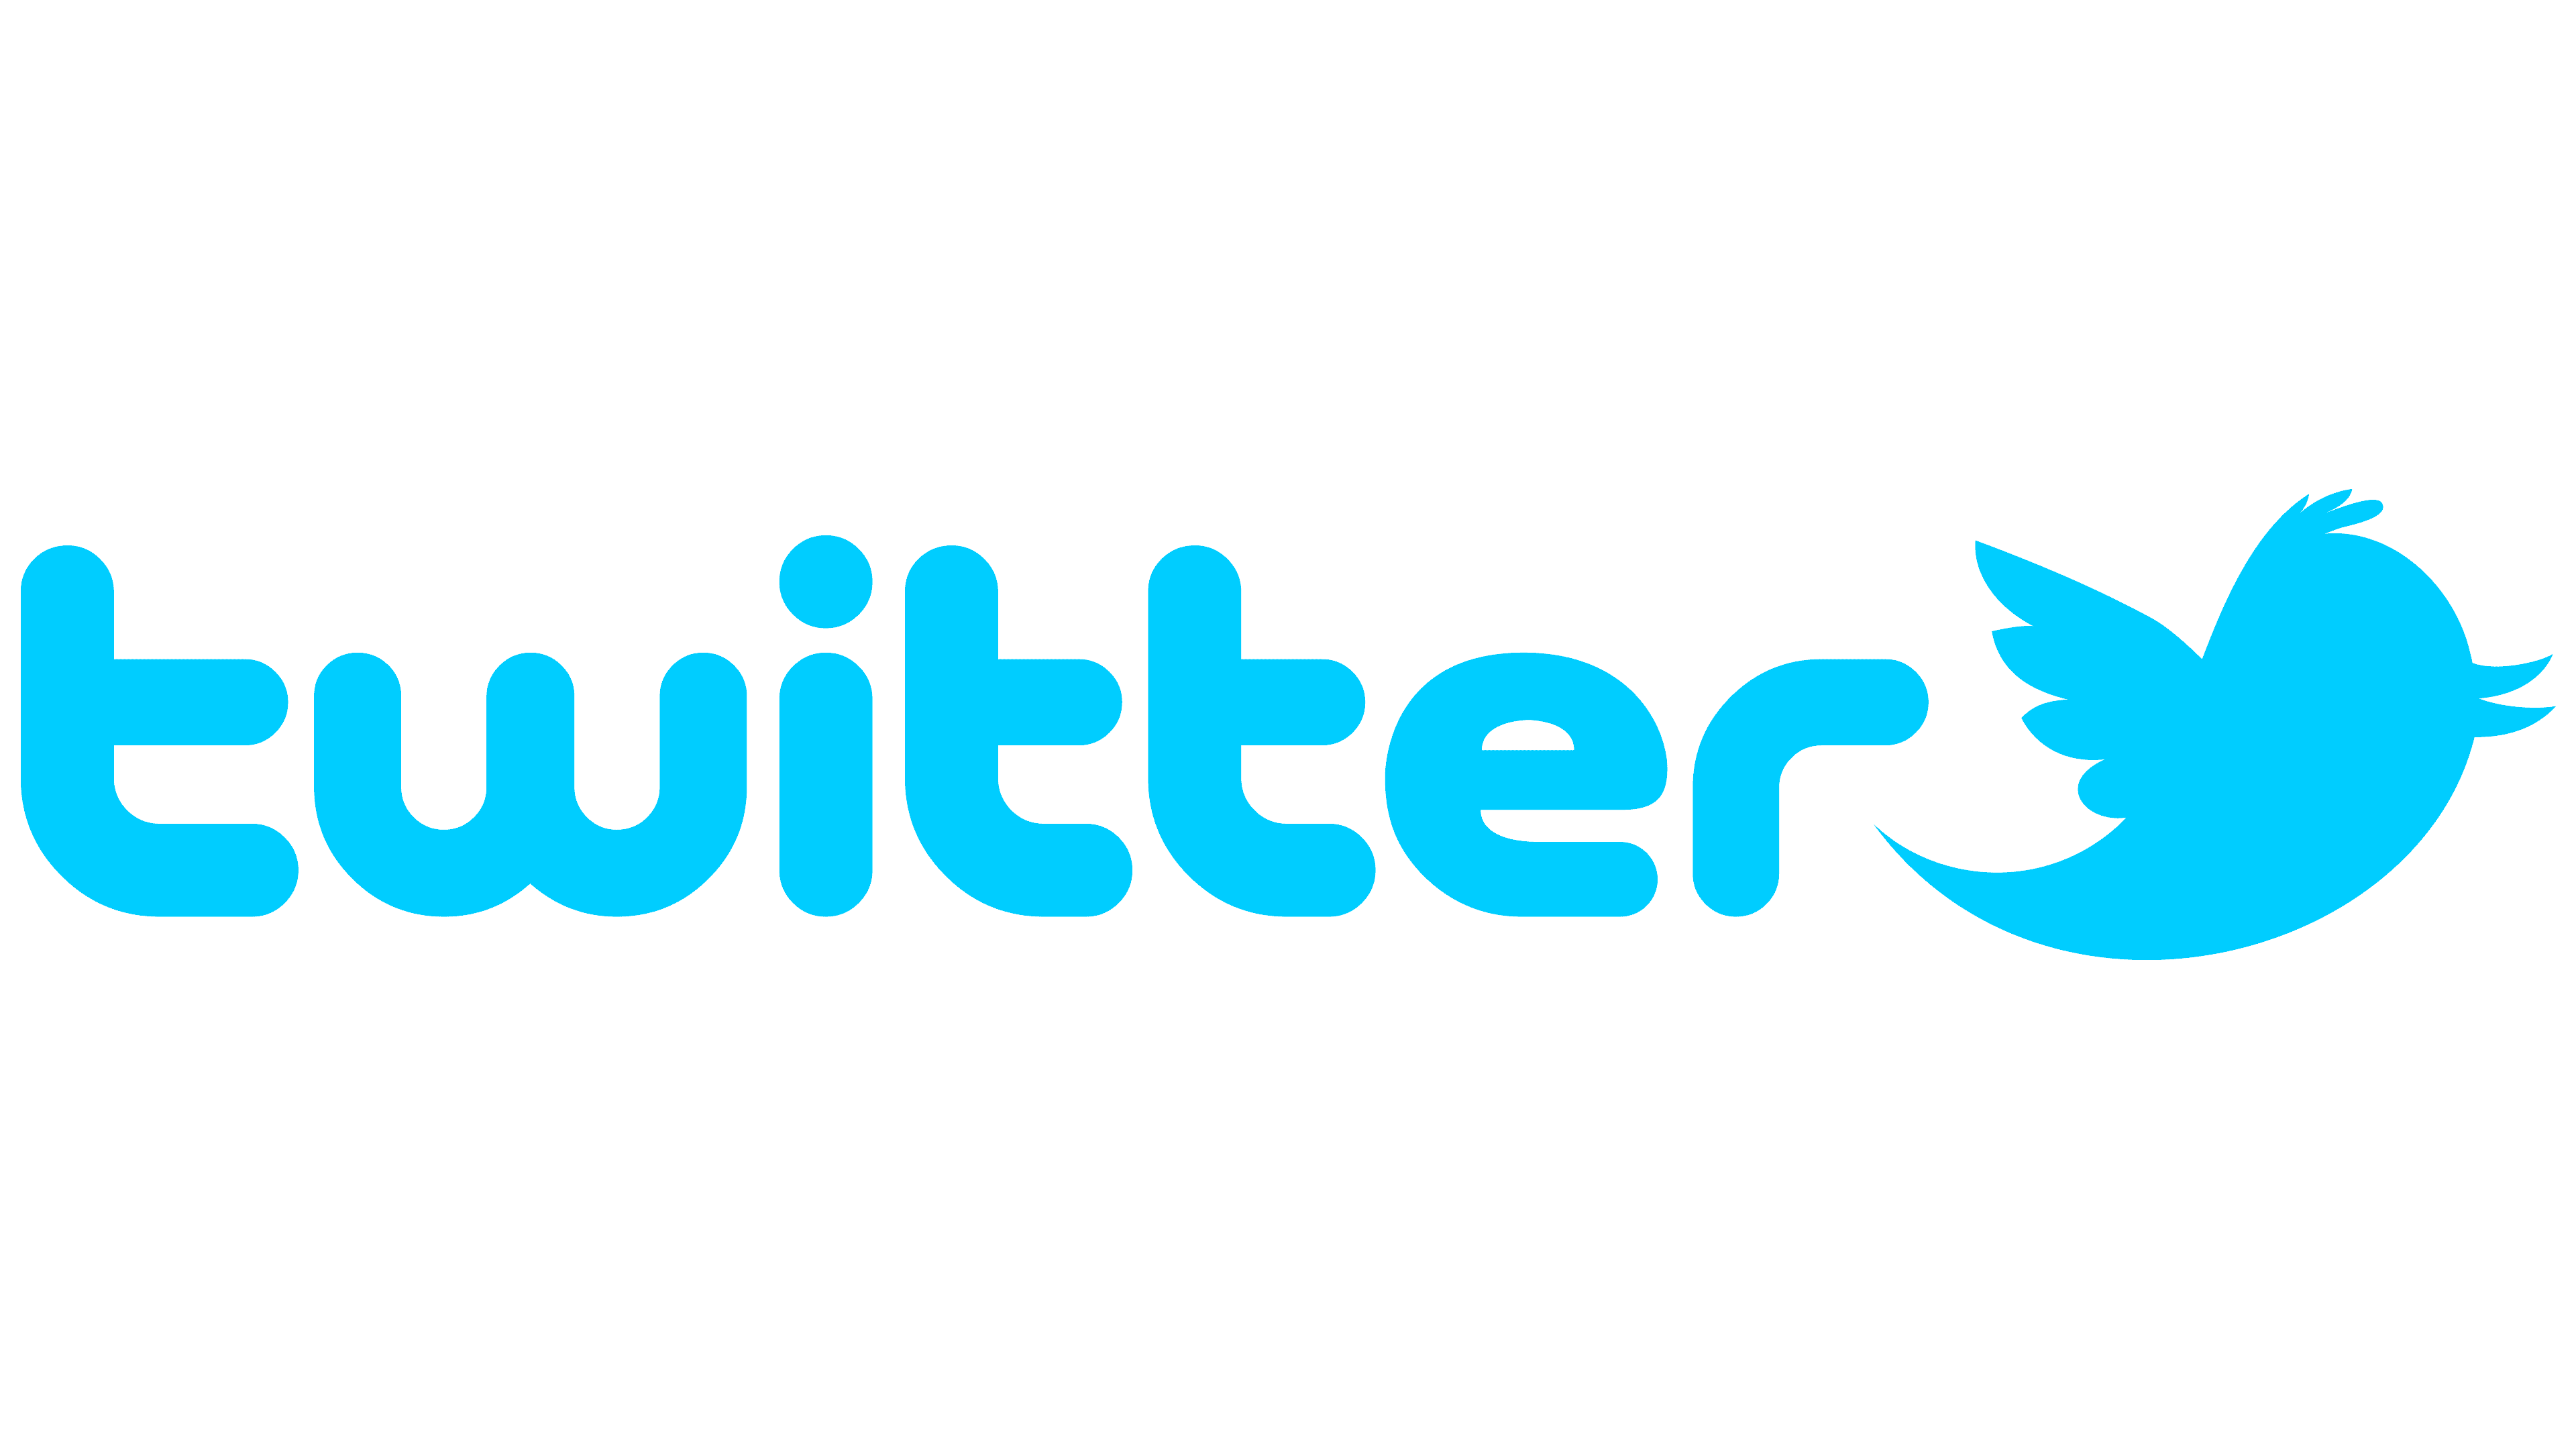 logo twitter download